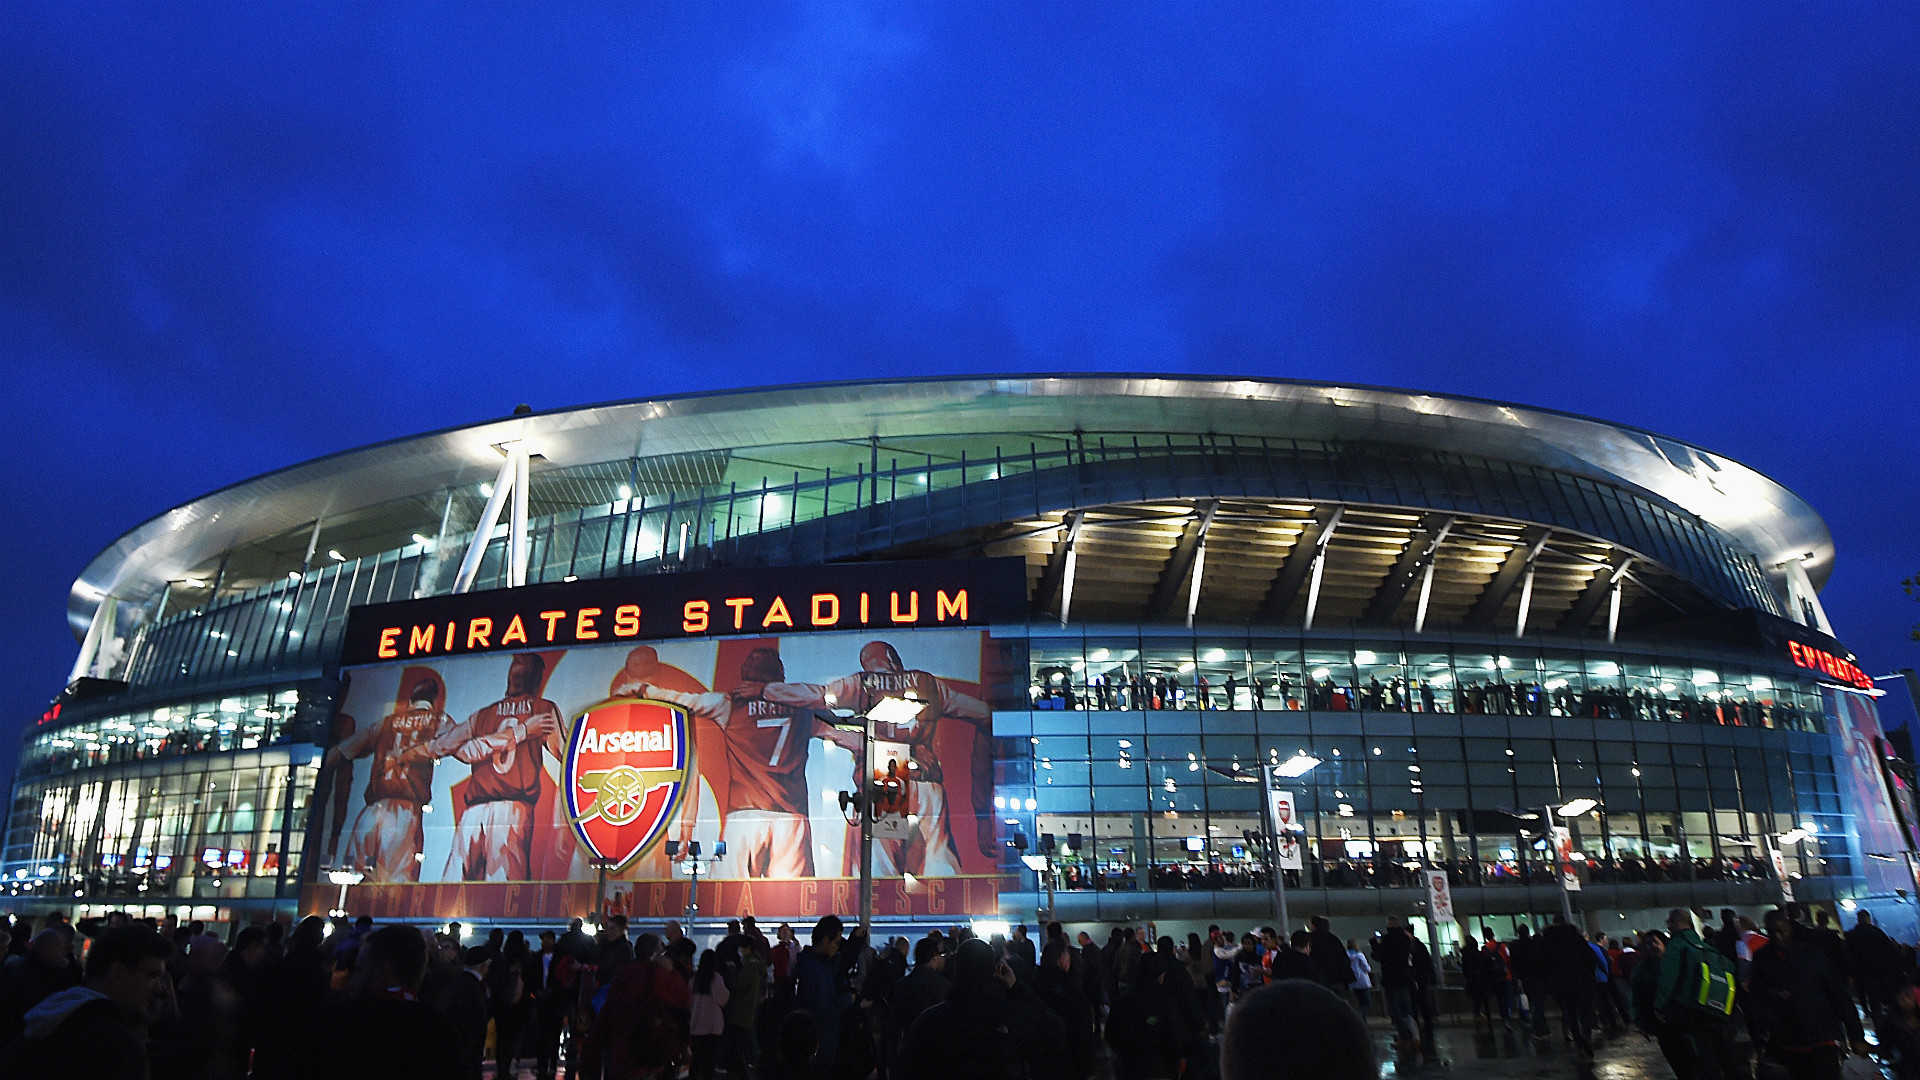 Emirates Stadium | Arsenal - Goal.com1920 x 1080